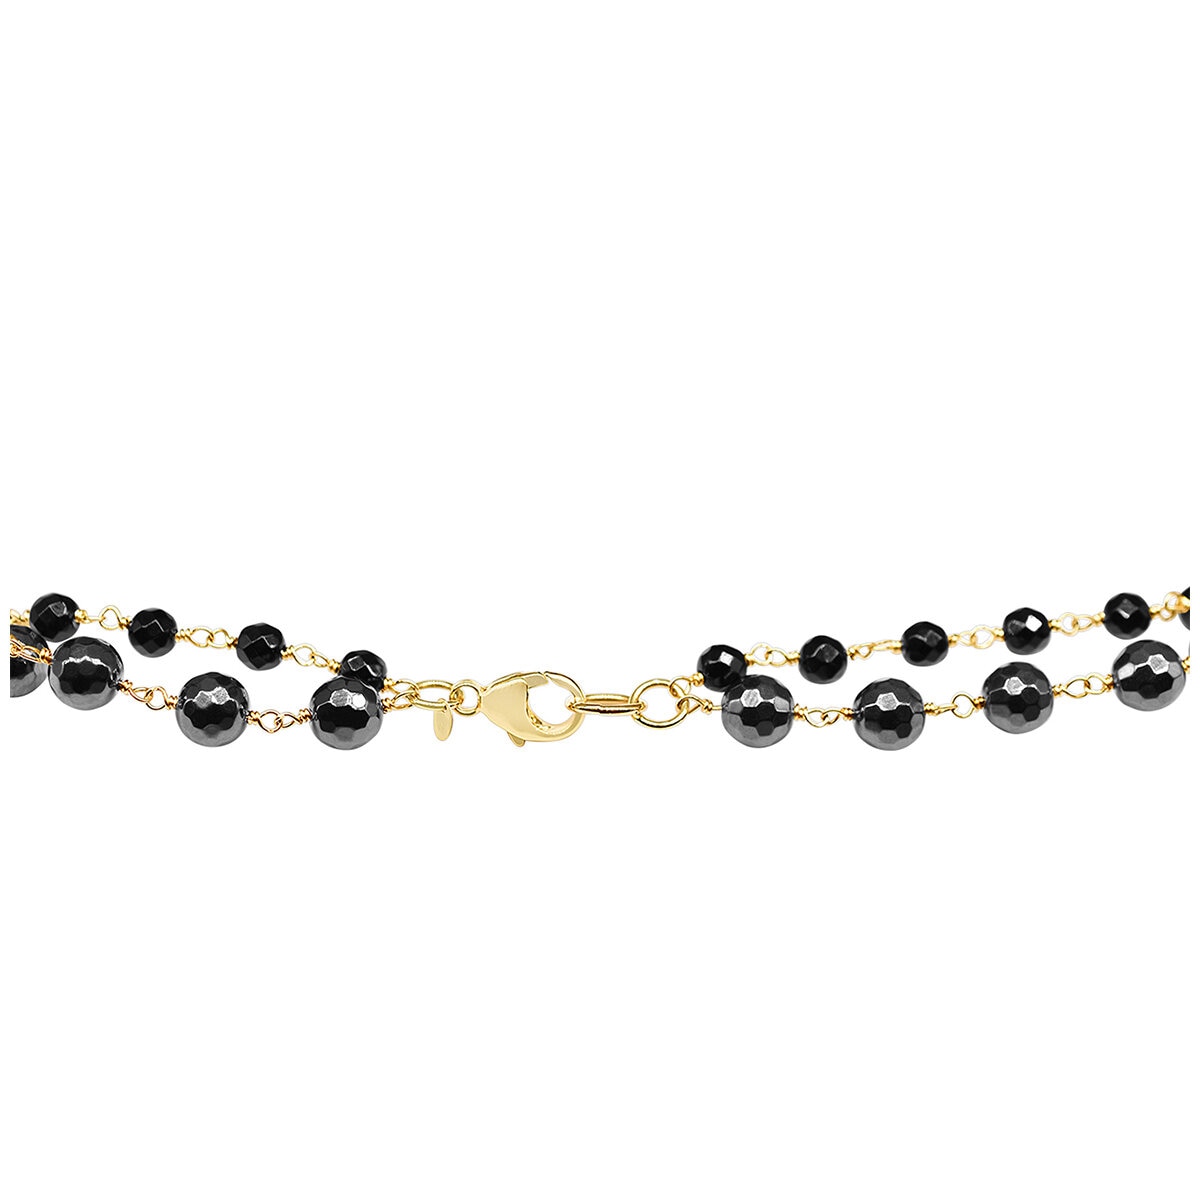 14KT Yellow Gold 2 Row Hematite & Black Onyx Necklace